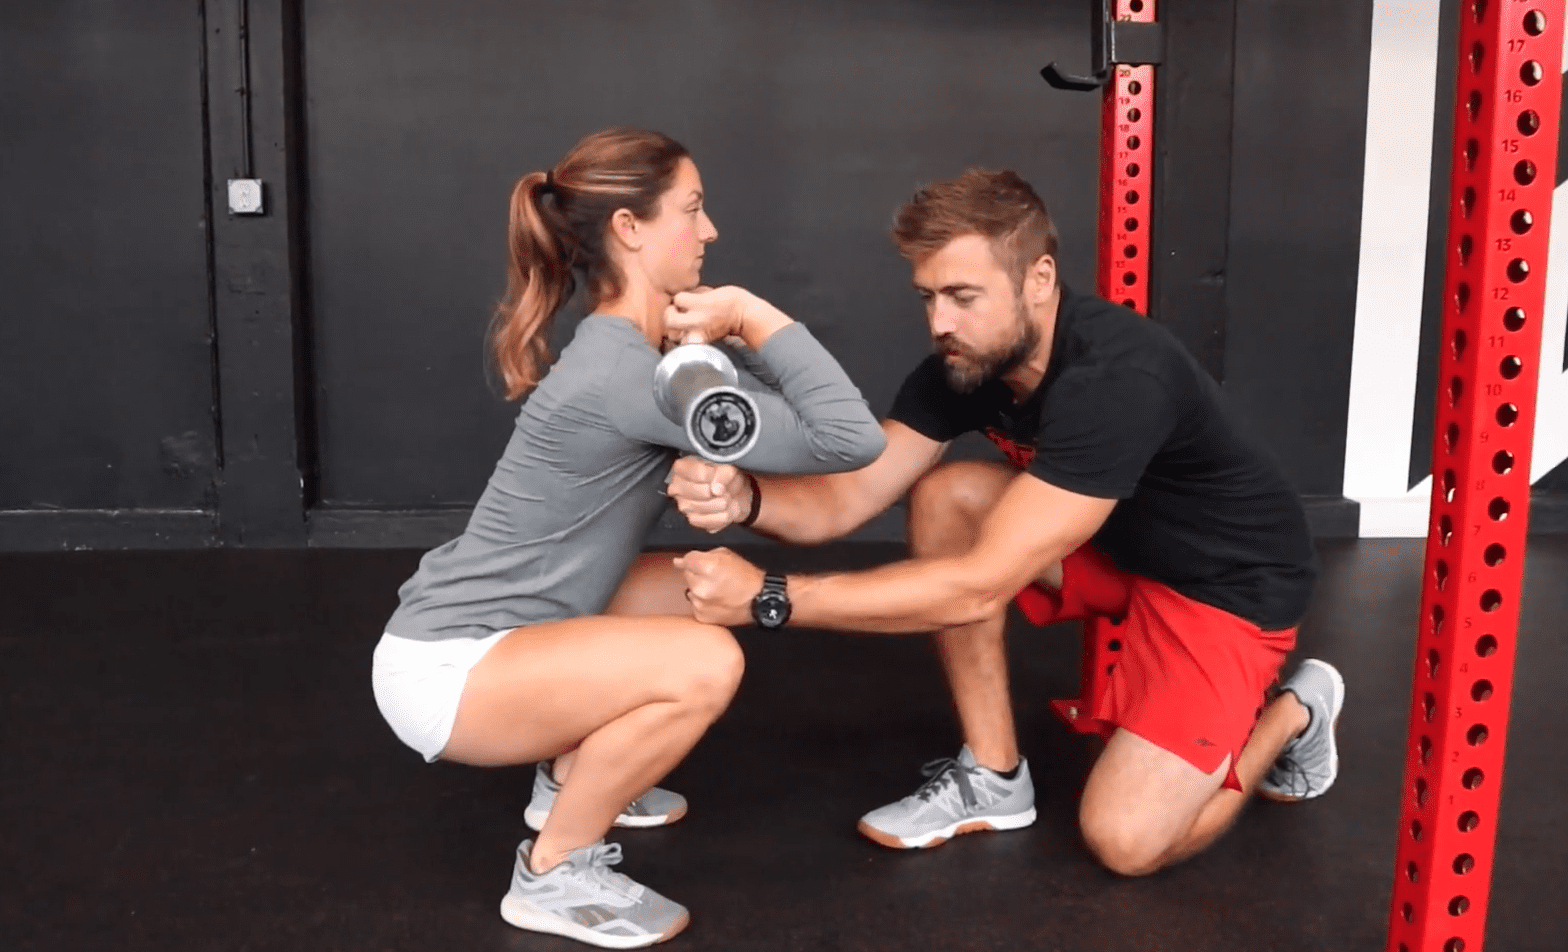 PLT4M instructors break down barbell front squat form and technique.